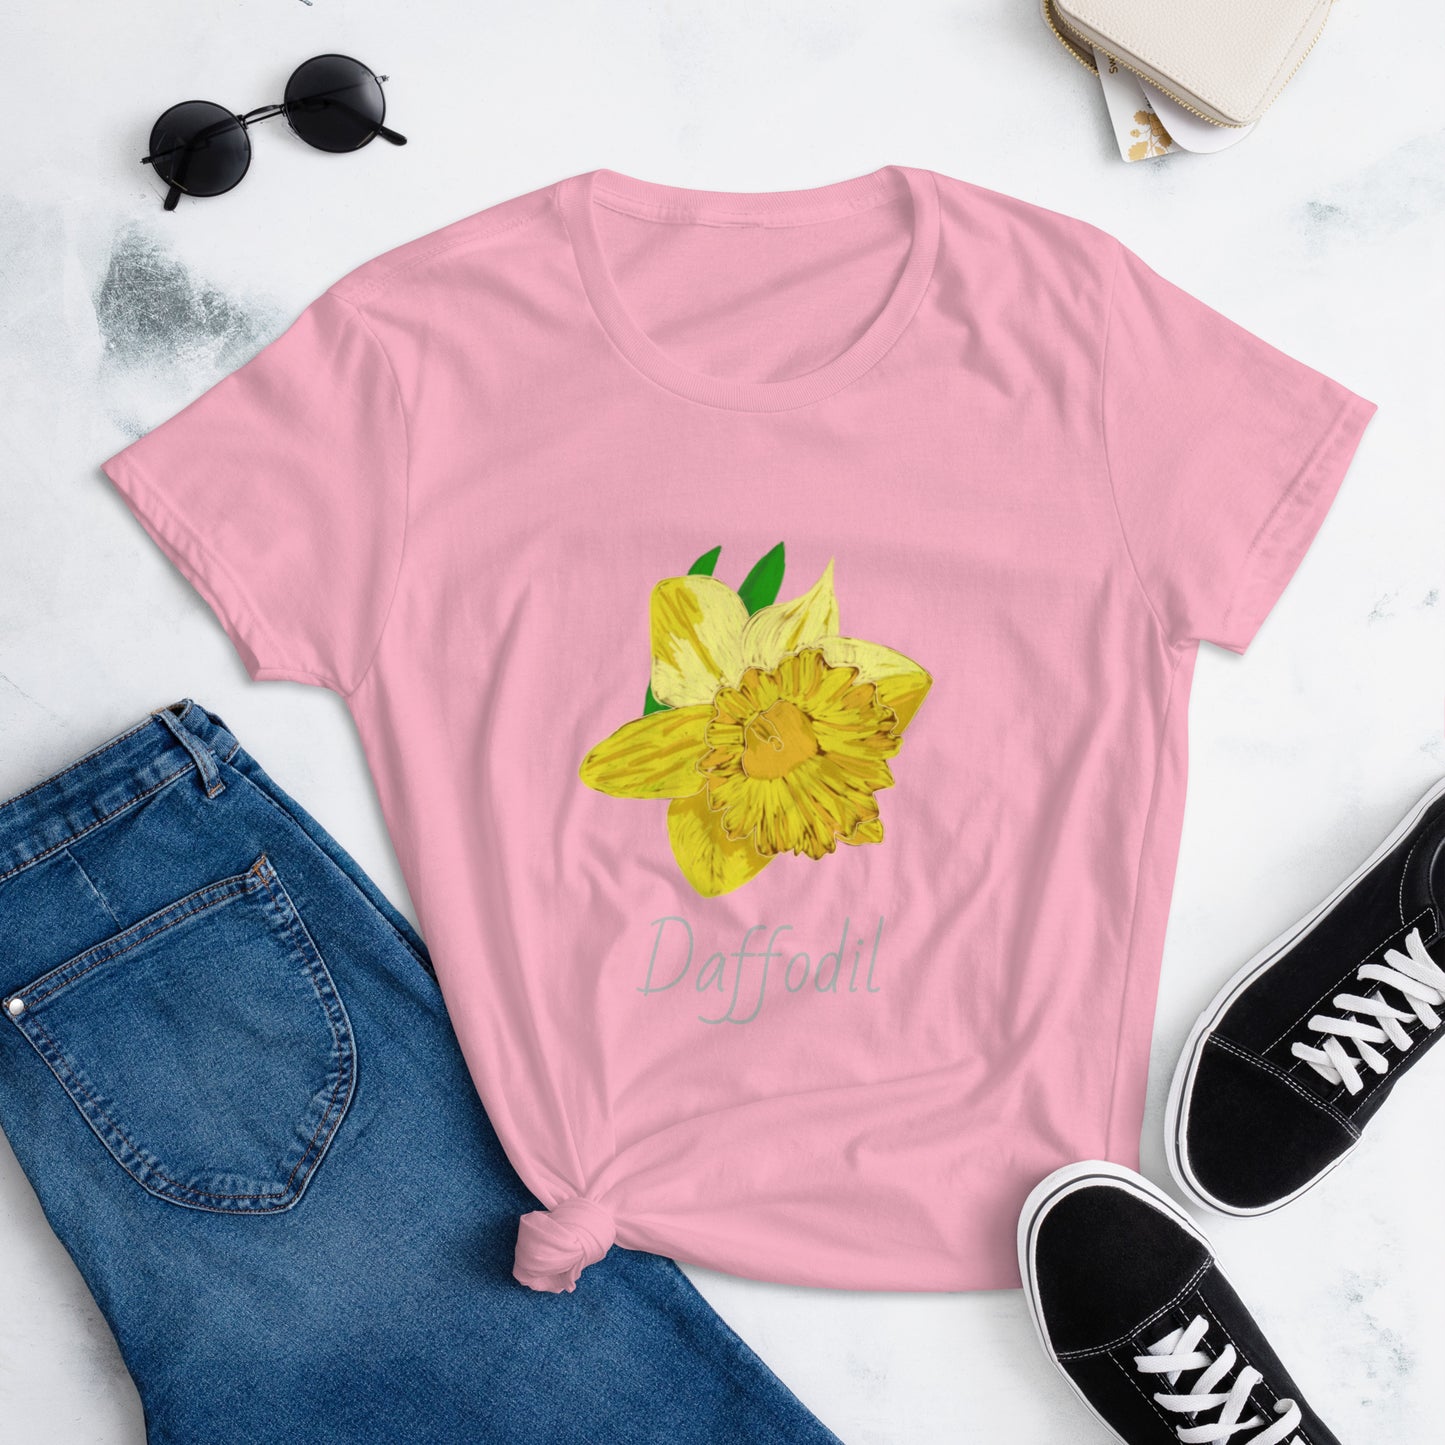 Flowers on Parade: Daffodil Women's short sleeve t-shirt